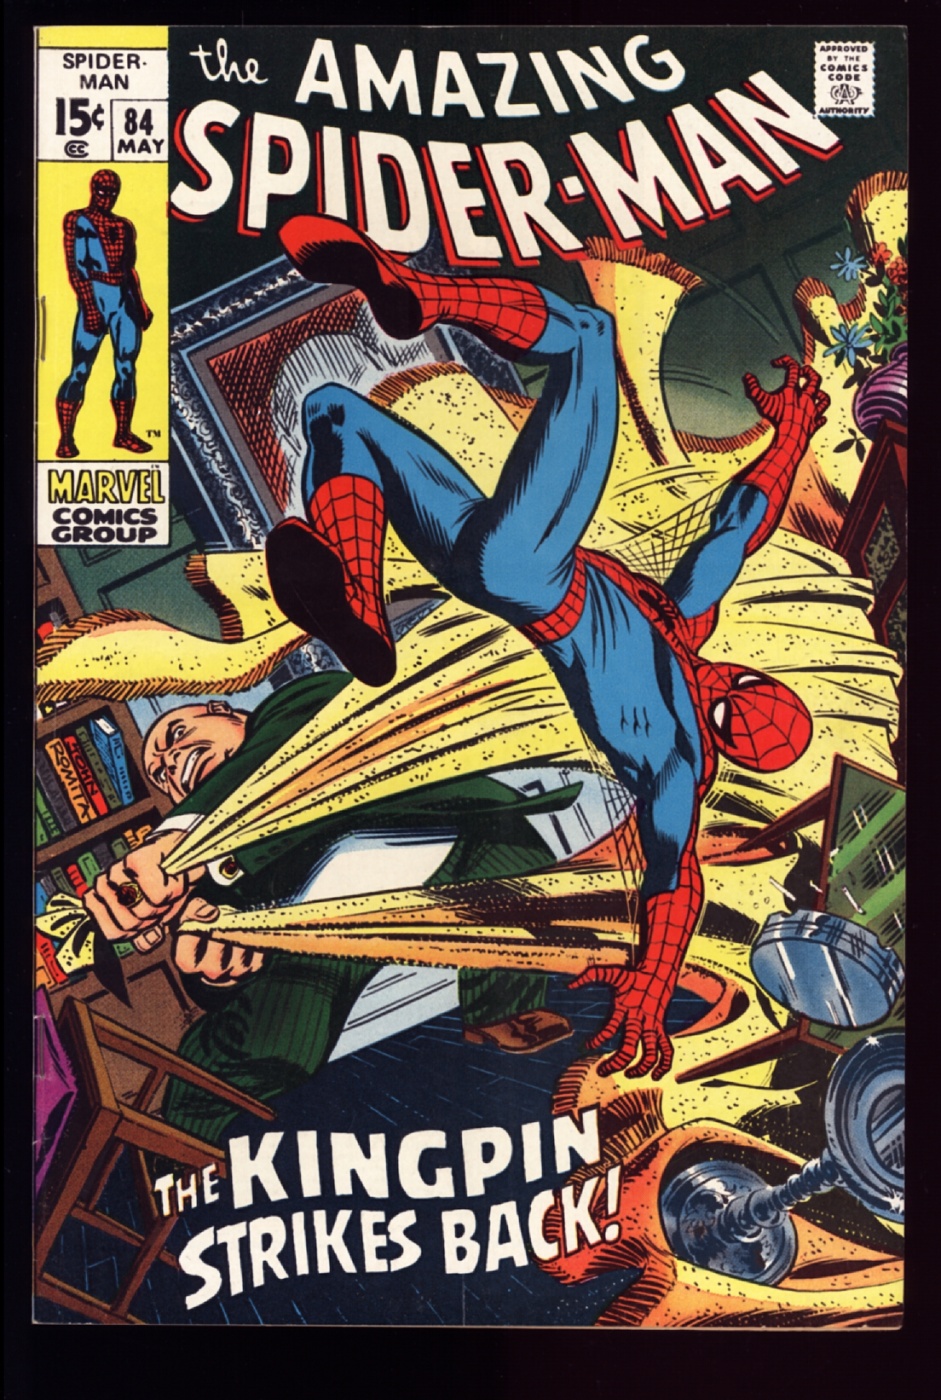 ComicConnect - Kupperberg, Alan - AMAZING SPIDER-MAN COLORING BOOK Splash  Page - VF: 8.0